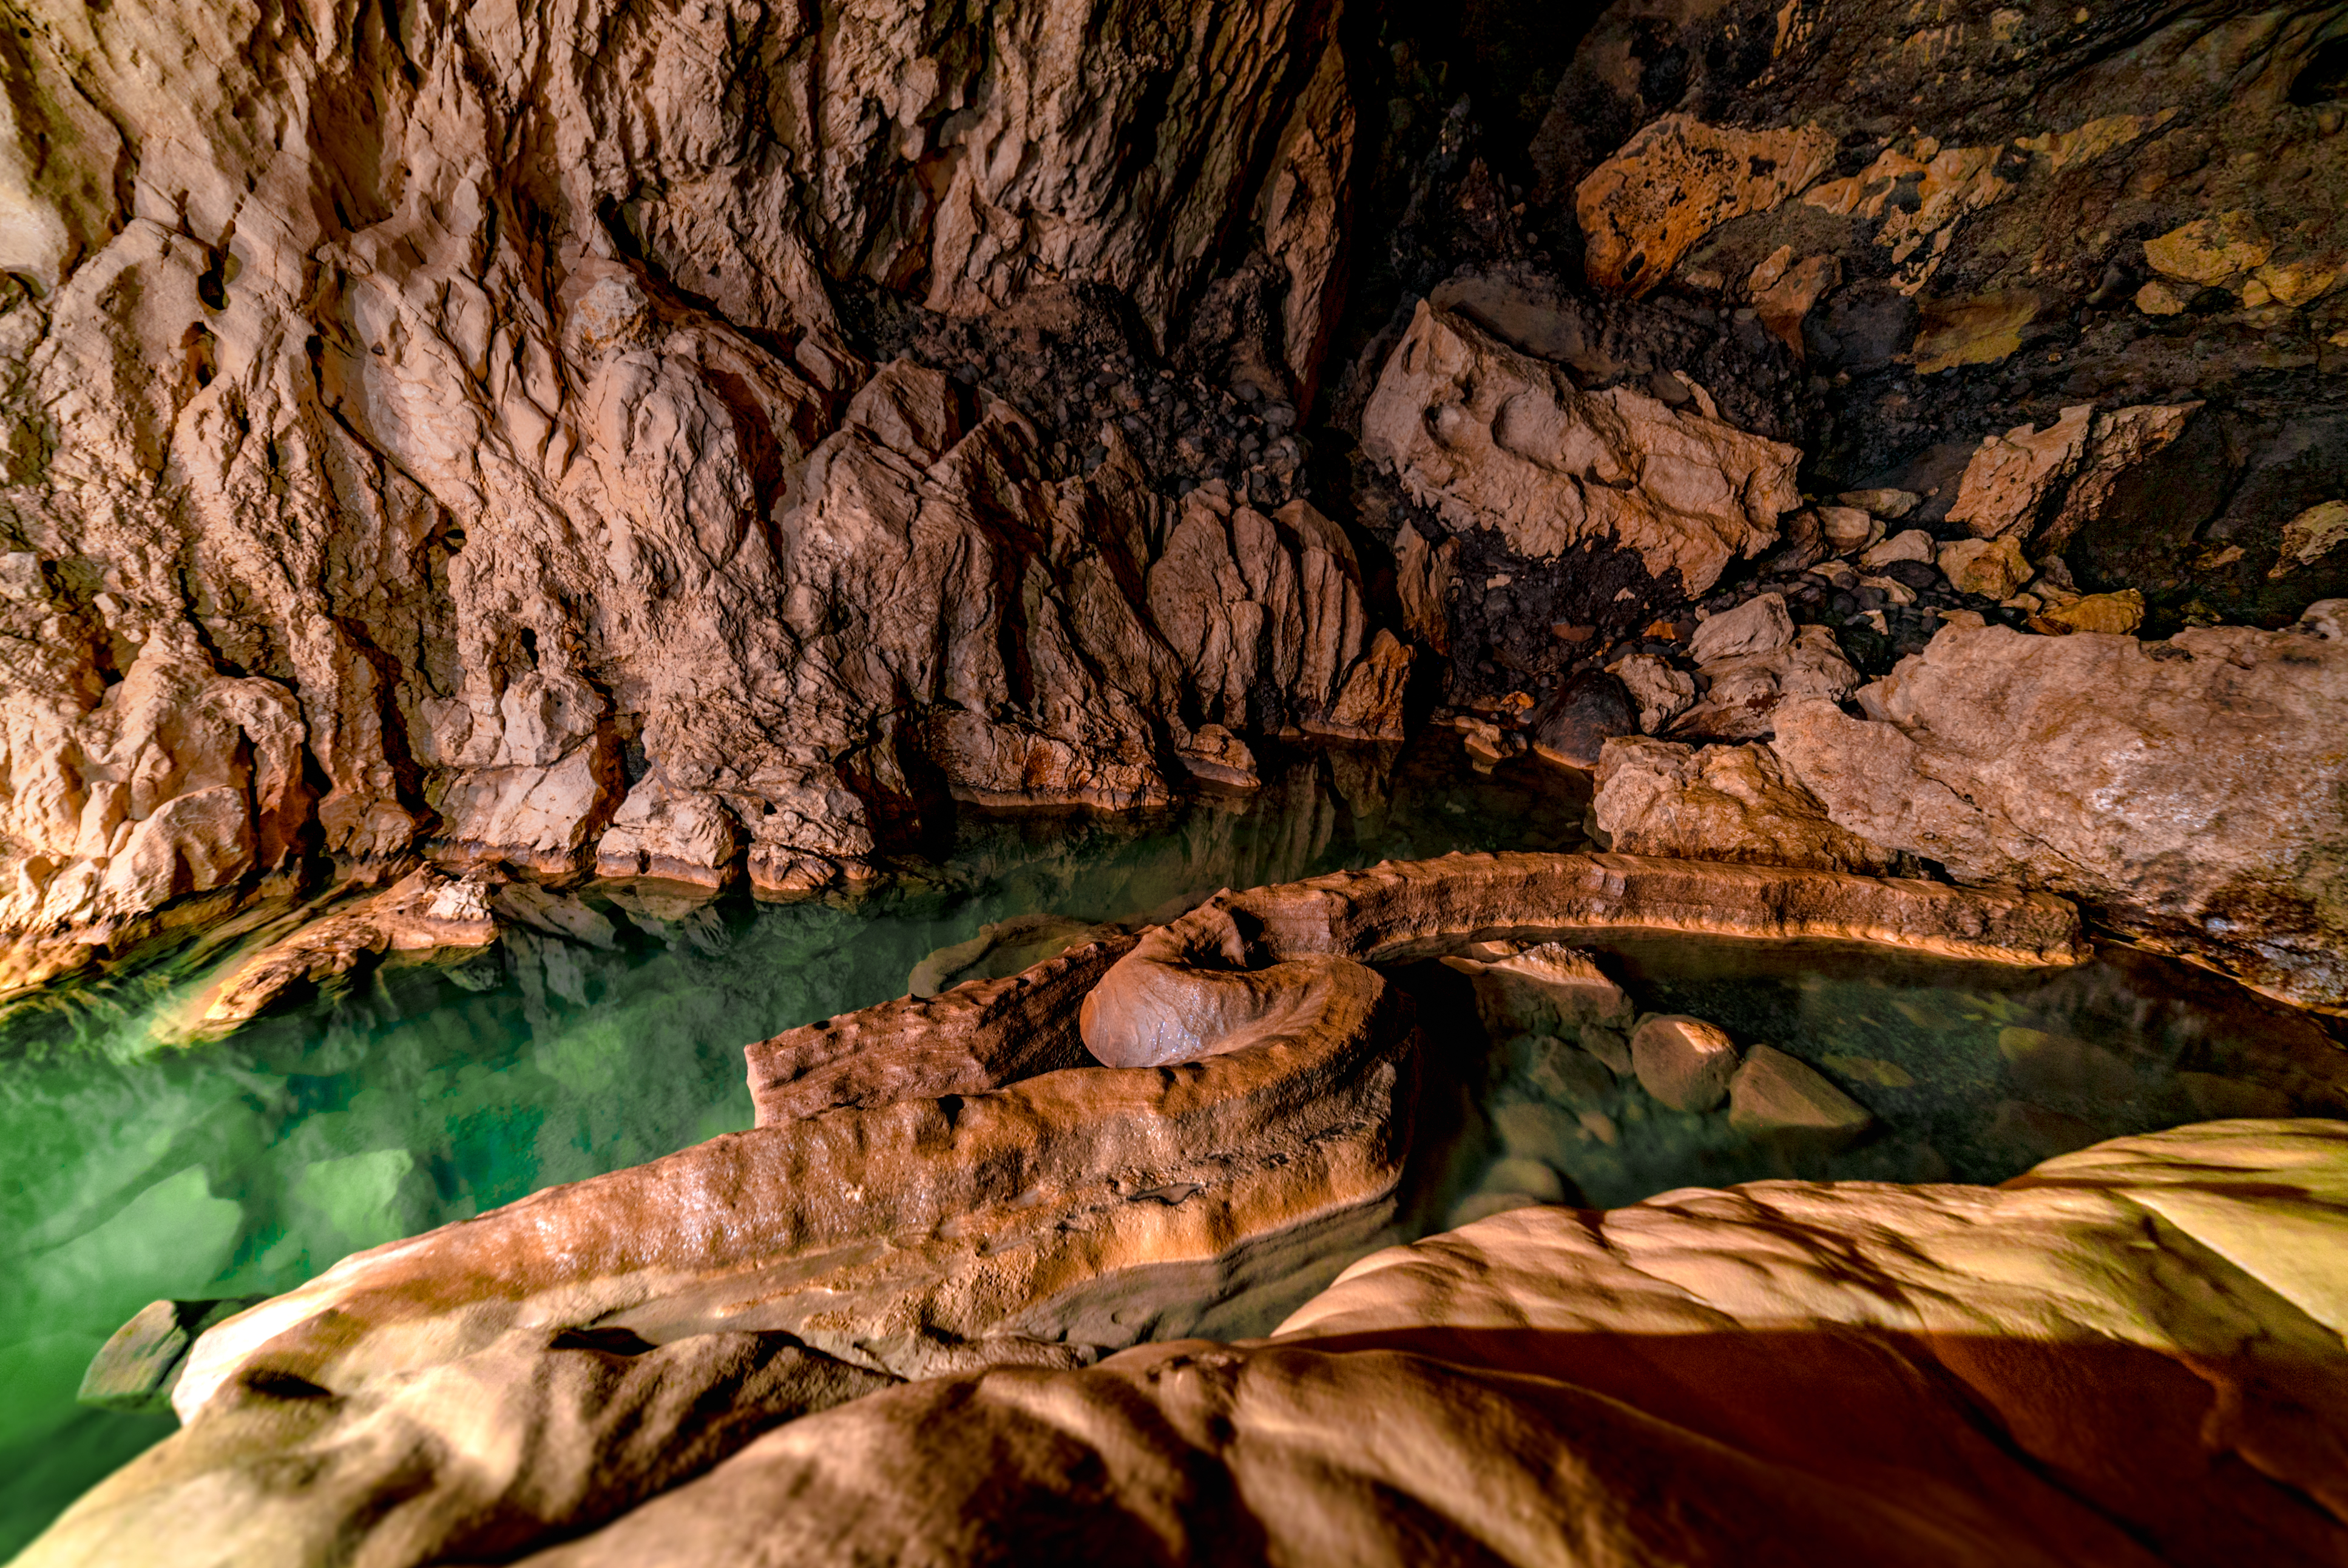 Inside the Sumaguing Cave in Sagada